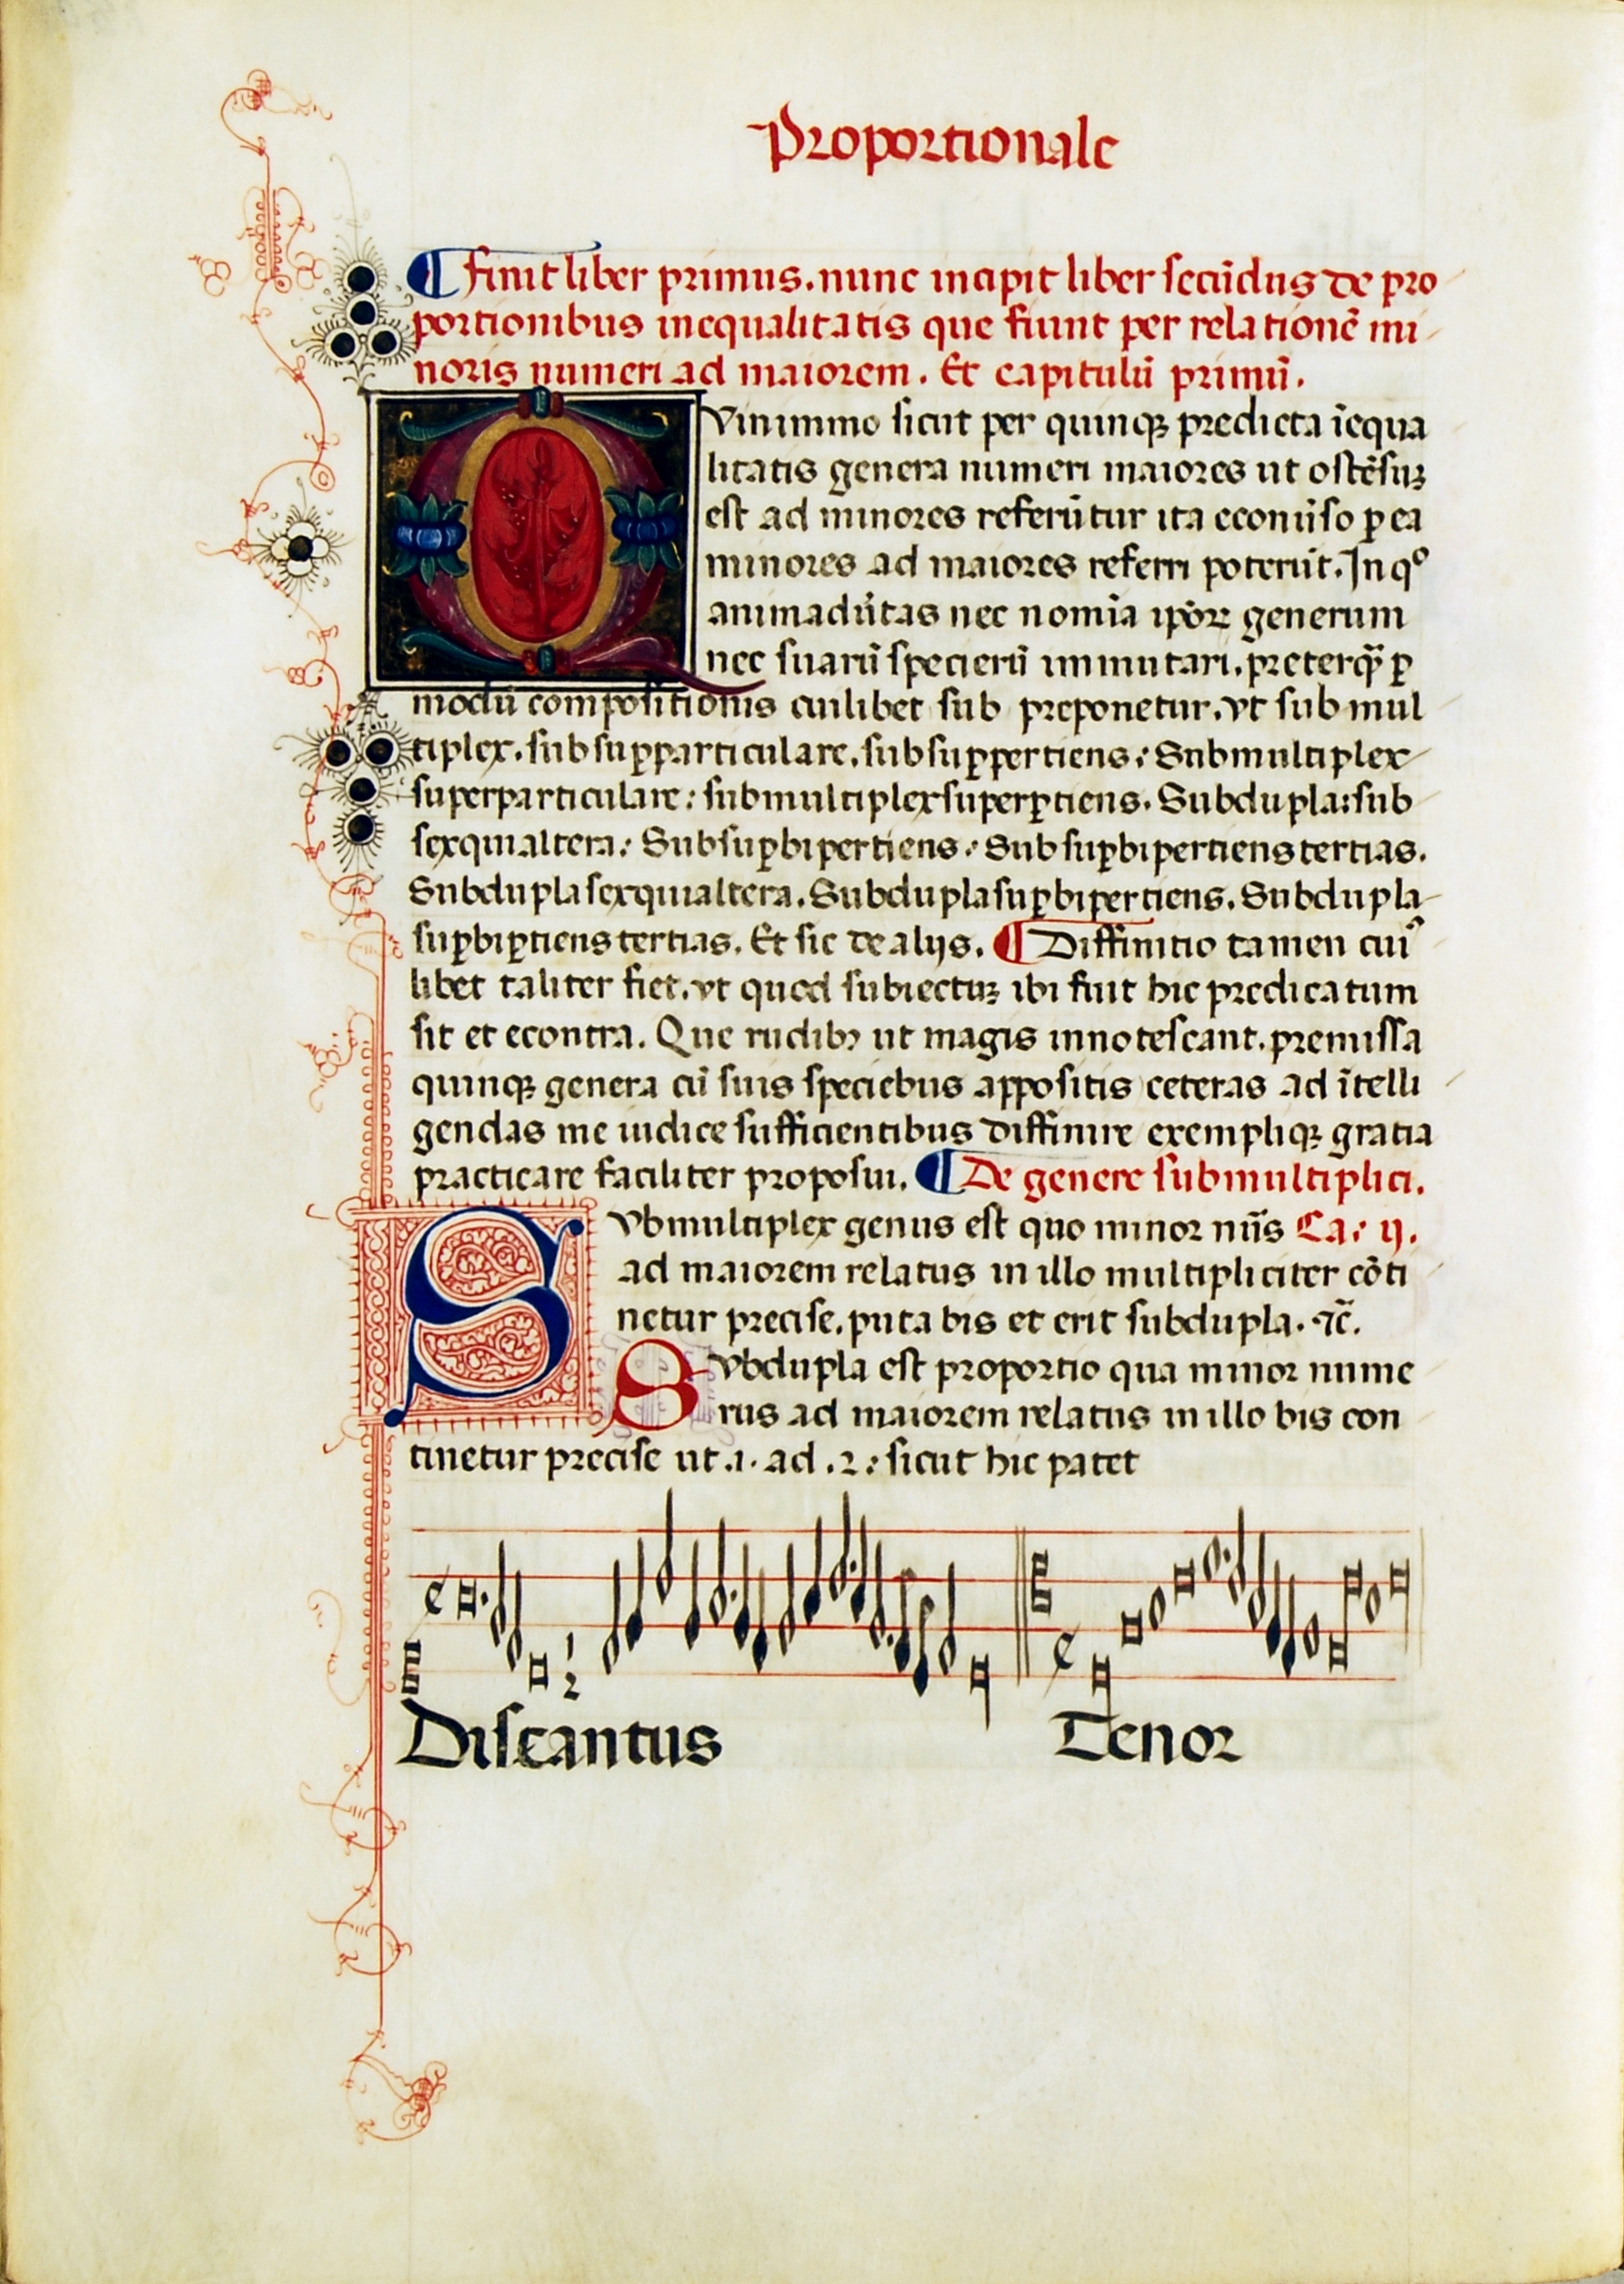 Bologna, Biblioteca Universitaria, MS 2573, fol. 180v. Source: Biblioteca Universitaria, Bologna.